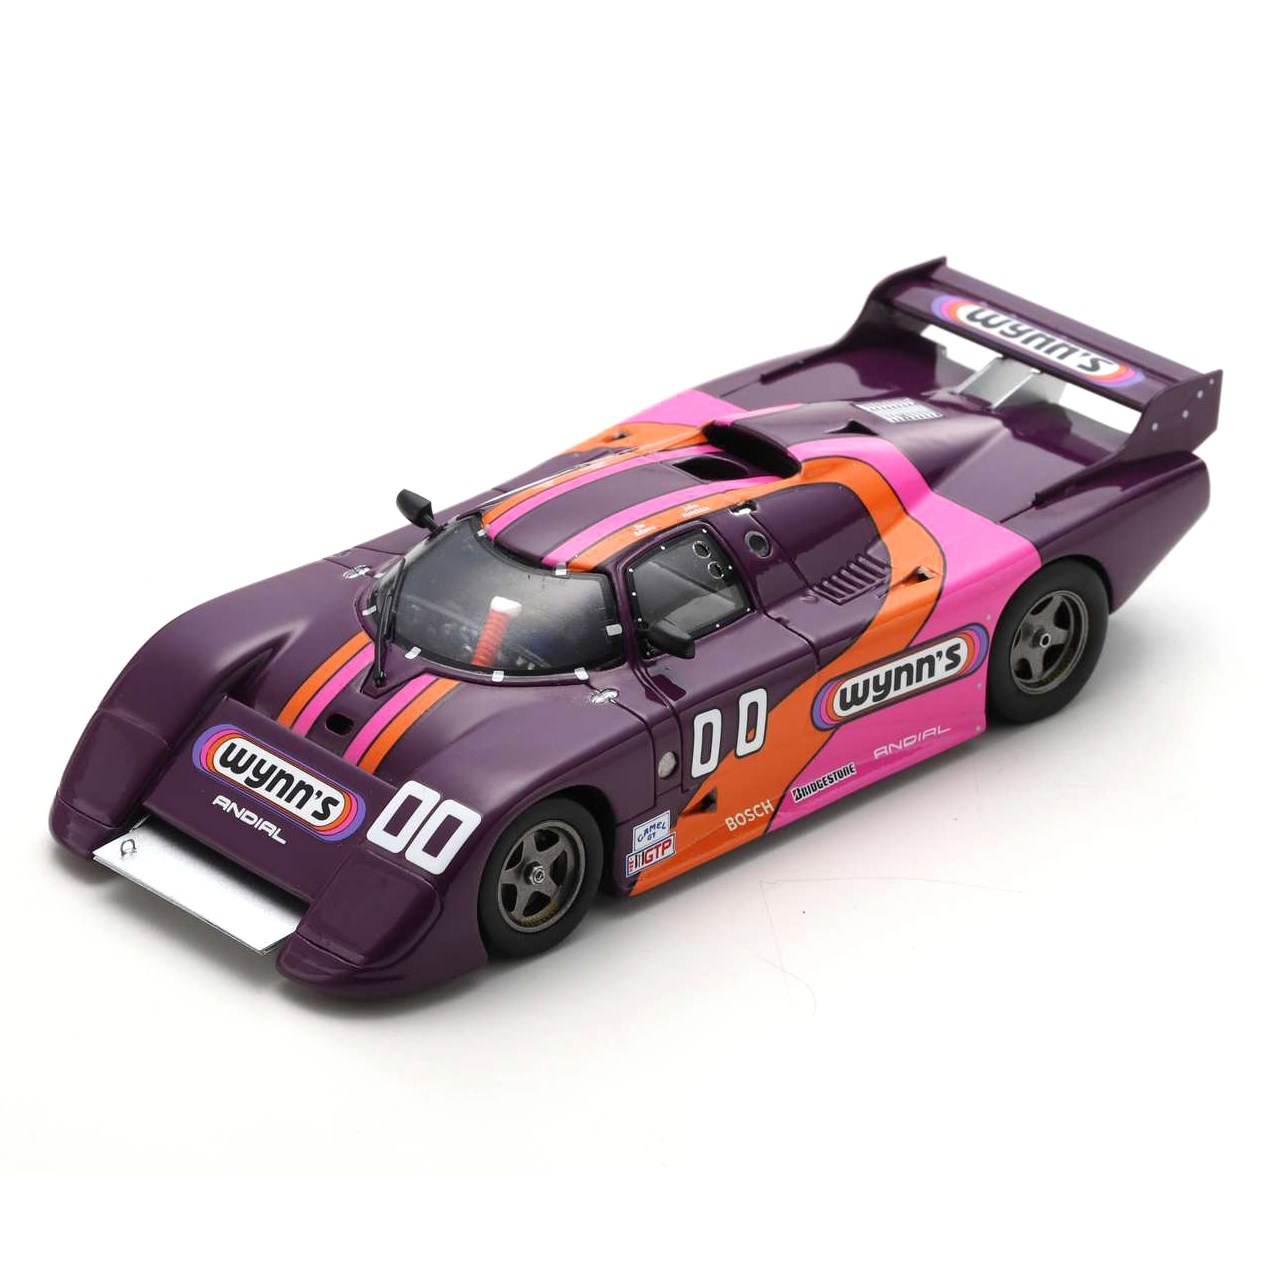 1:43 Spark Diecast Racing Car LM33 Set of 4 Model Cars 24h Le Mans 